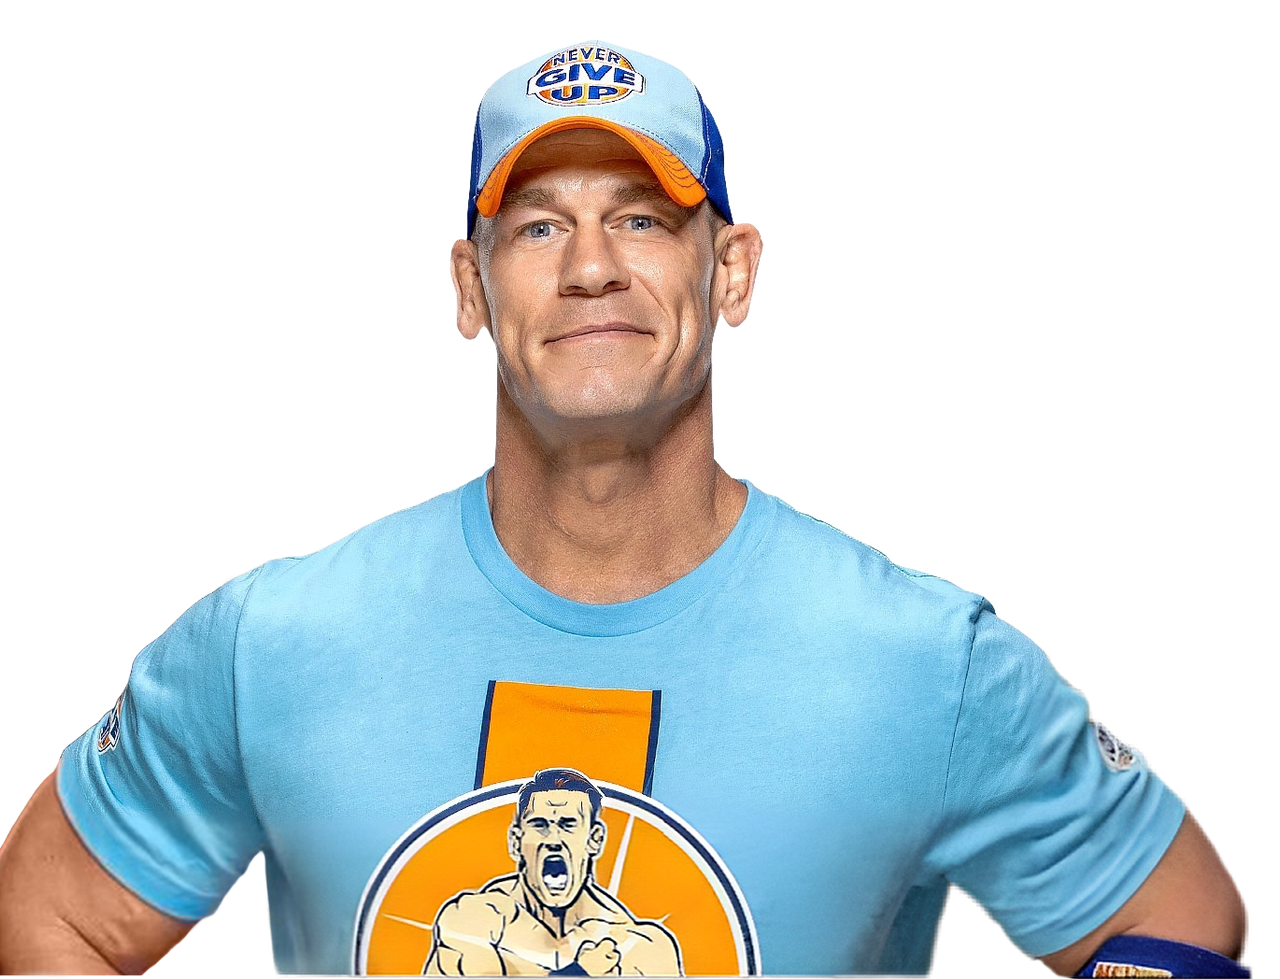 John Cena Png by CookieMaster3 on DeviantArt